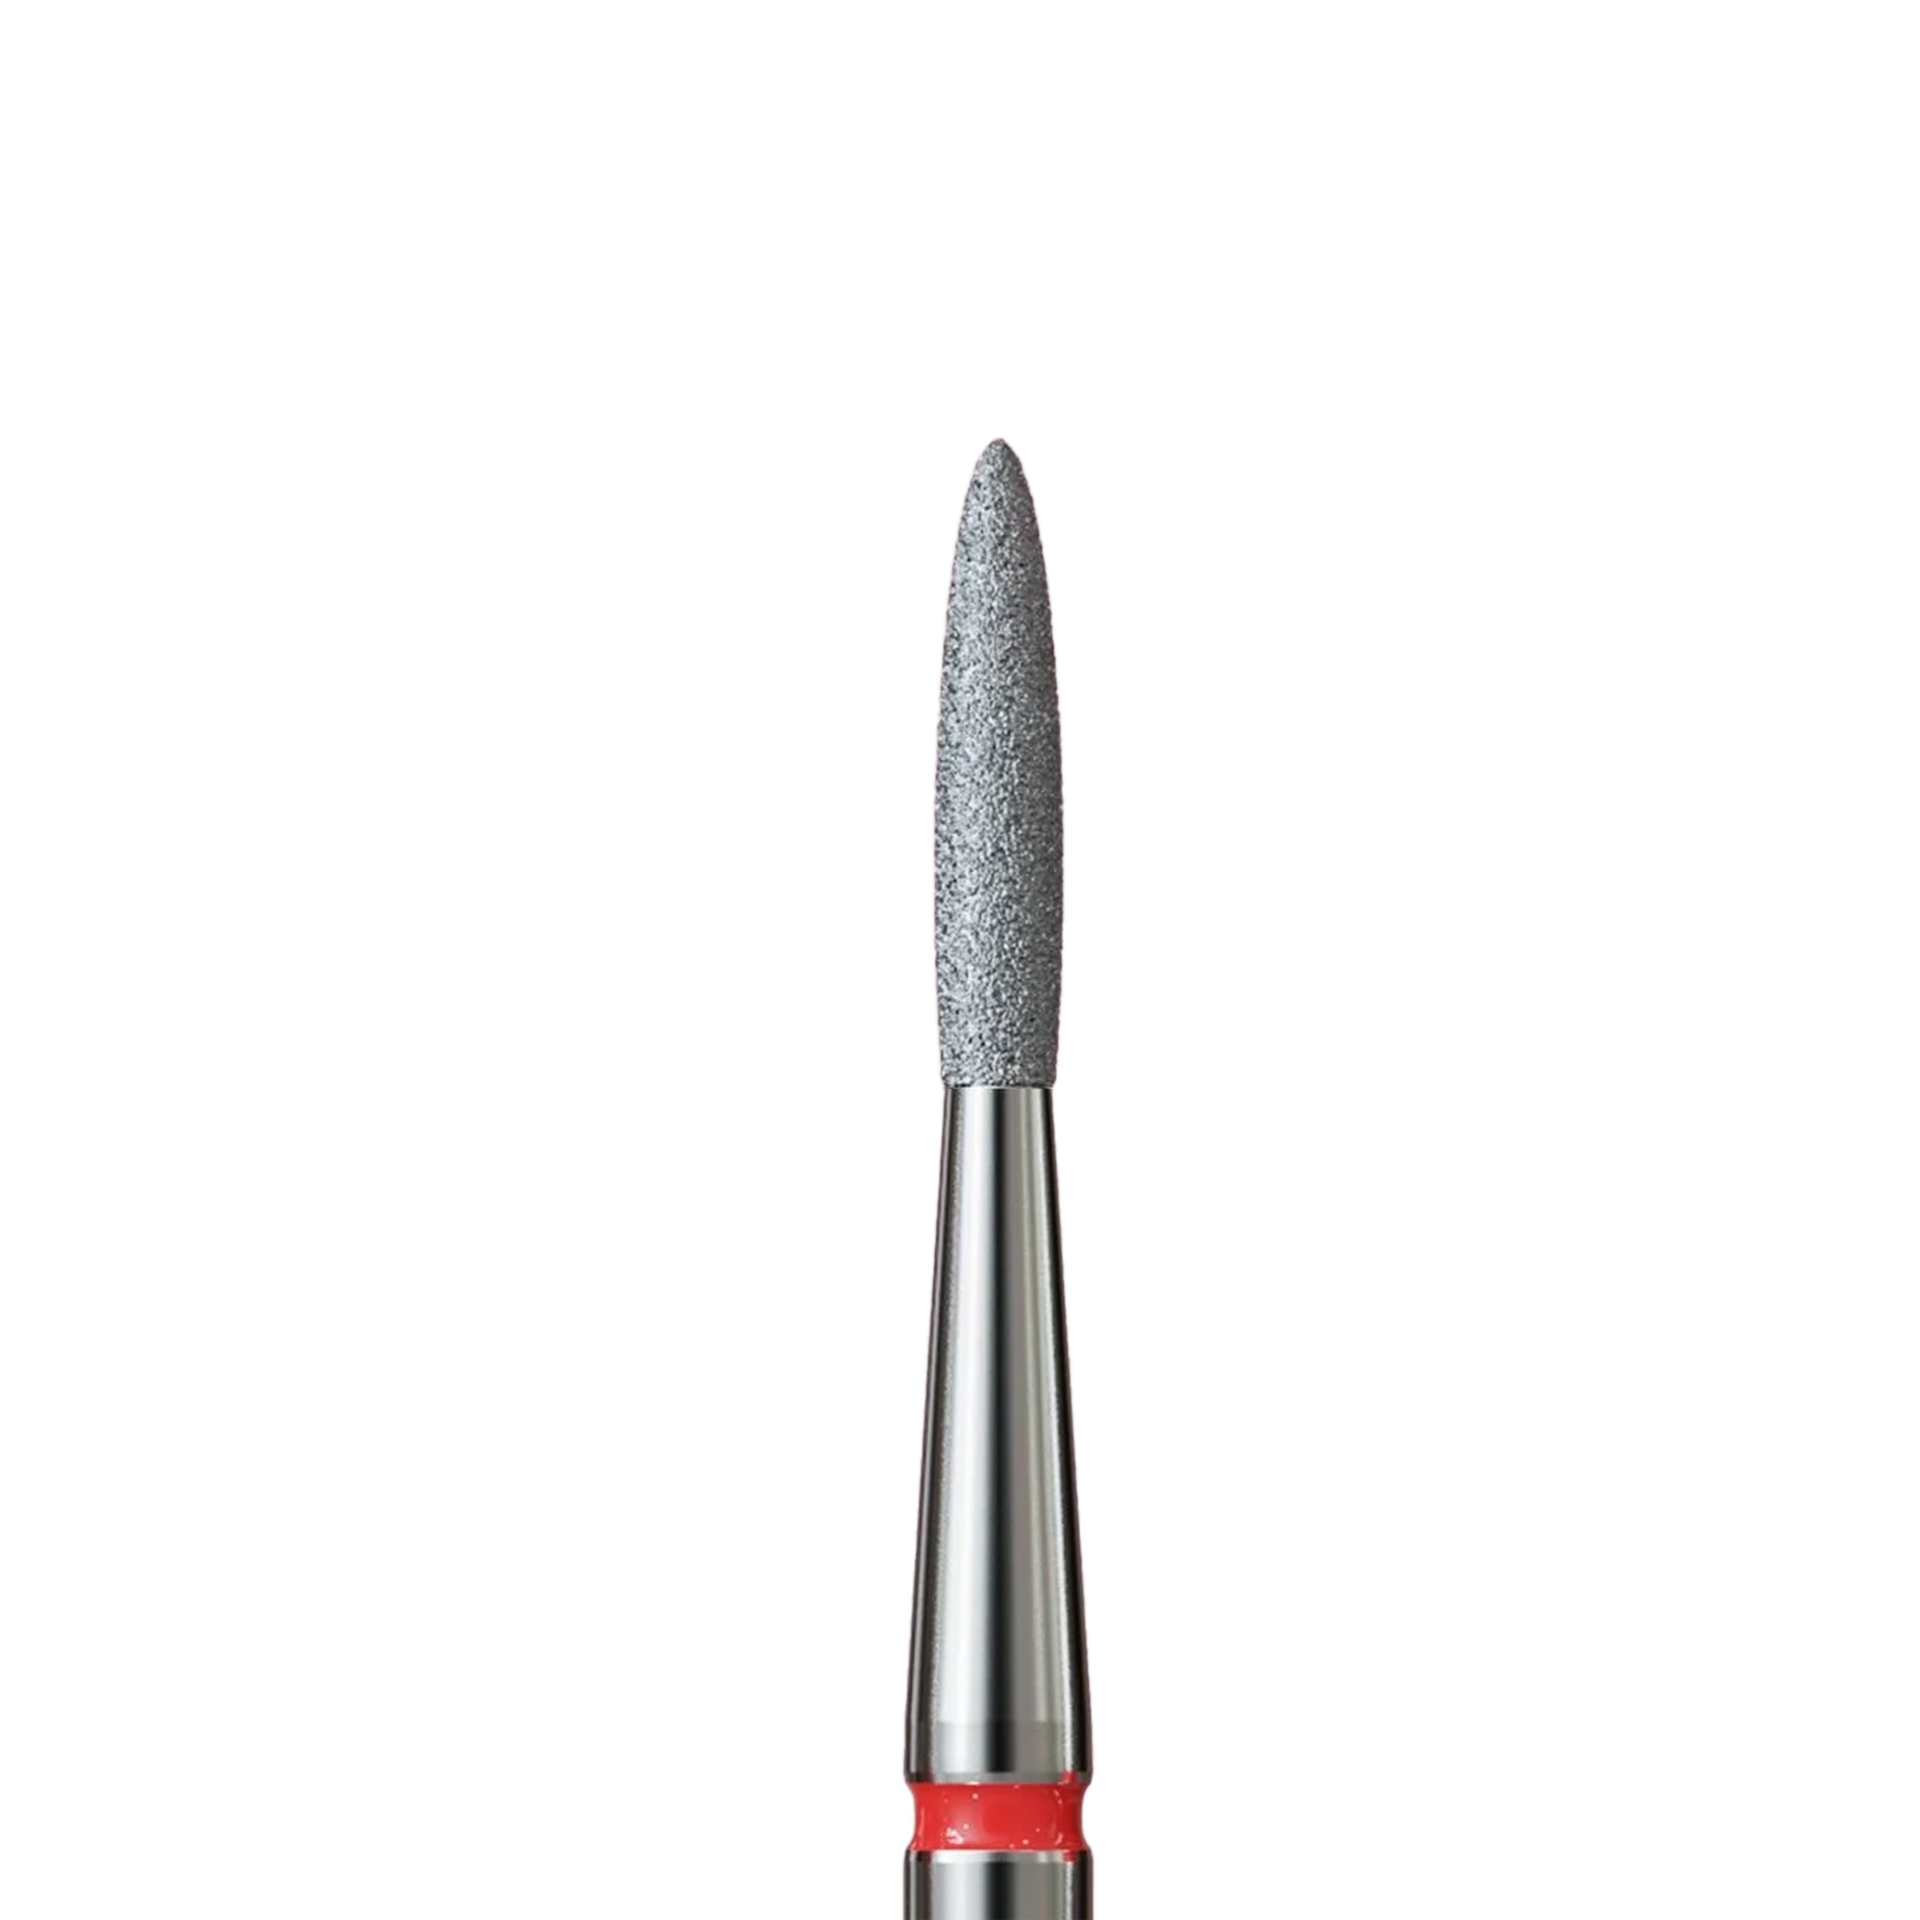 IQ Nails High Quality Gyémántporos csiszolófej - 1.6 mm, lándzsa, finom